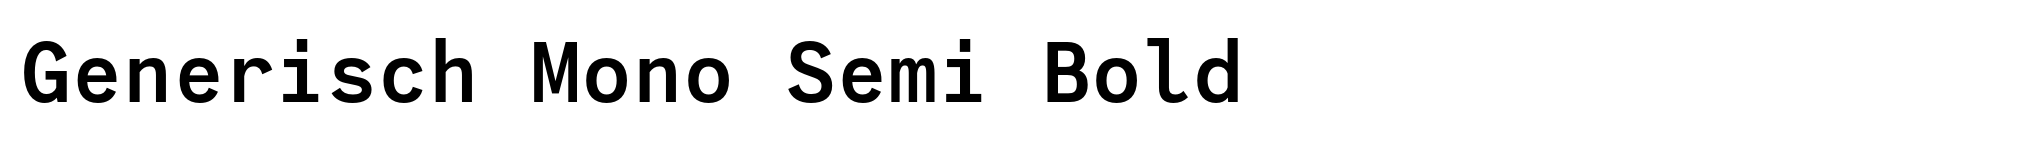 Generisch Mono Semi Bold image